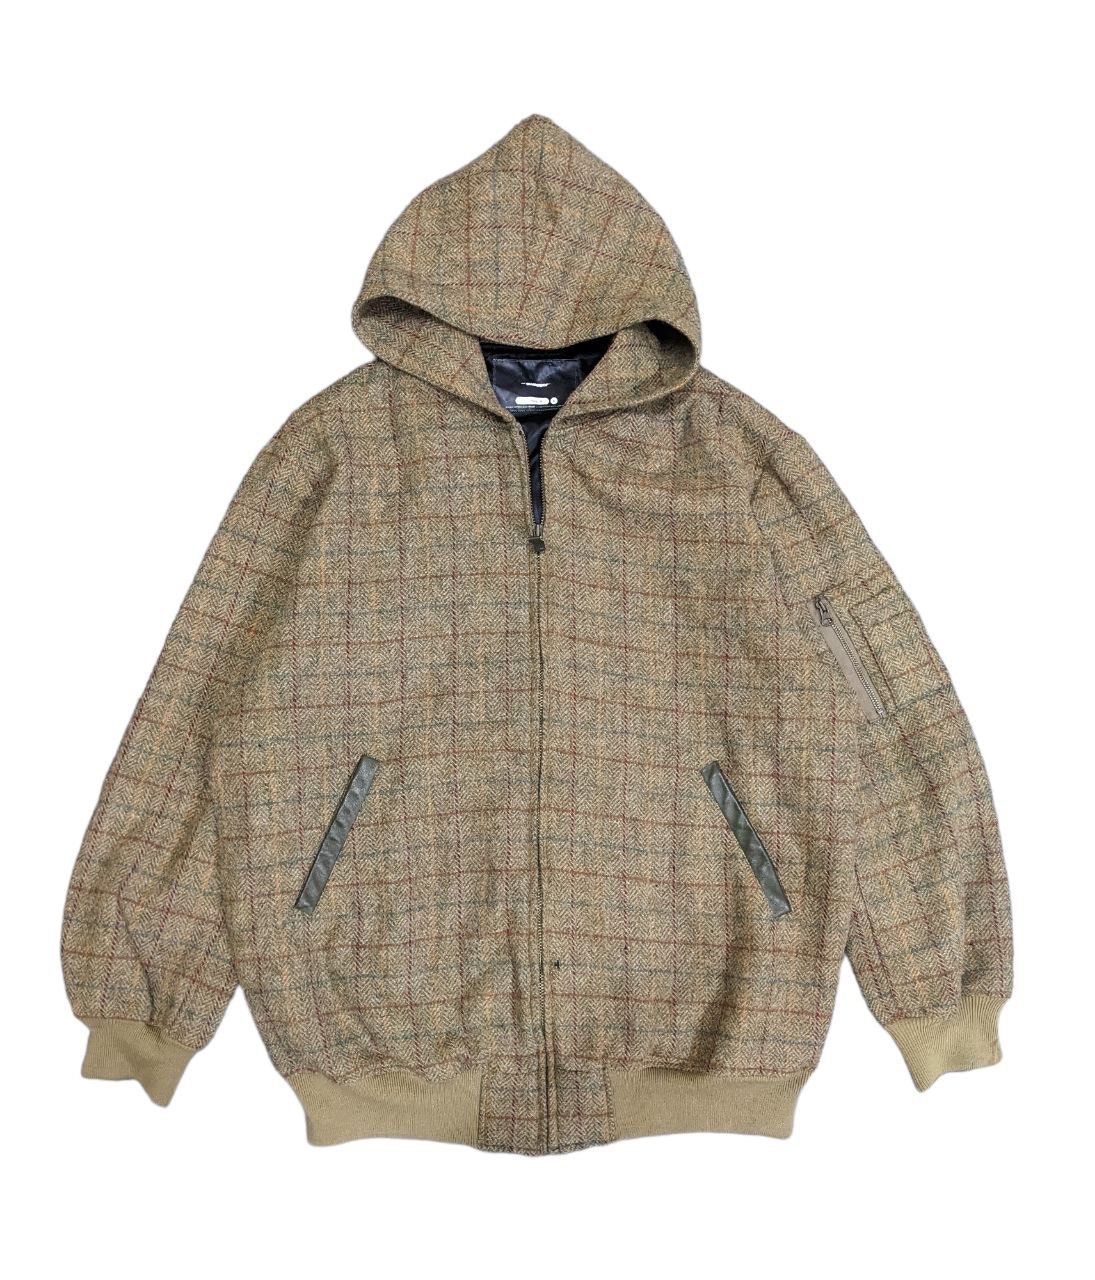 Archival Clothing Swagger x Harris Tweed Bomber Hoodie Jacket